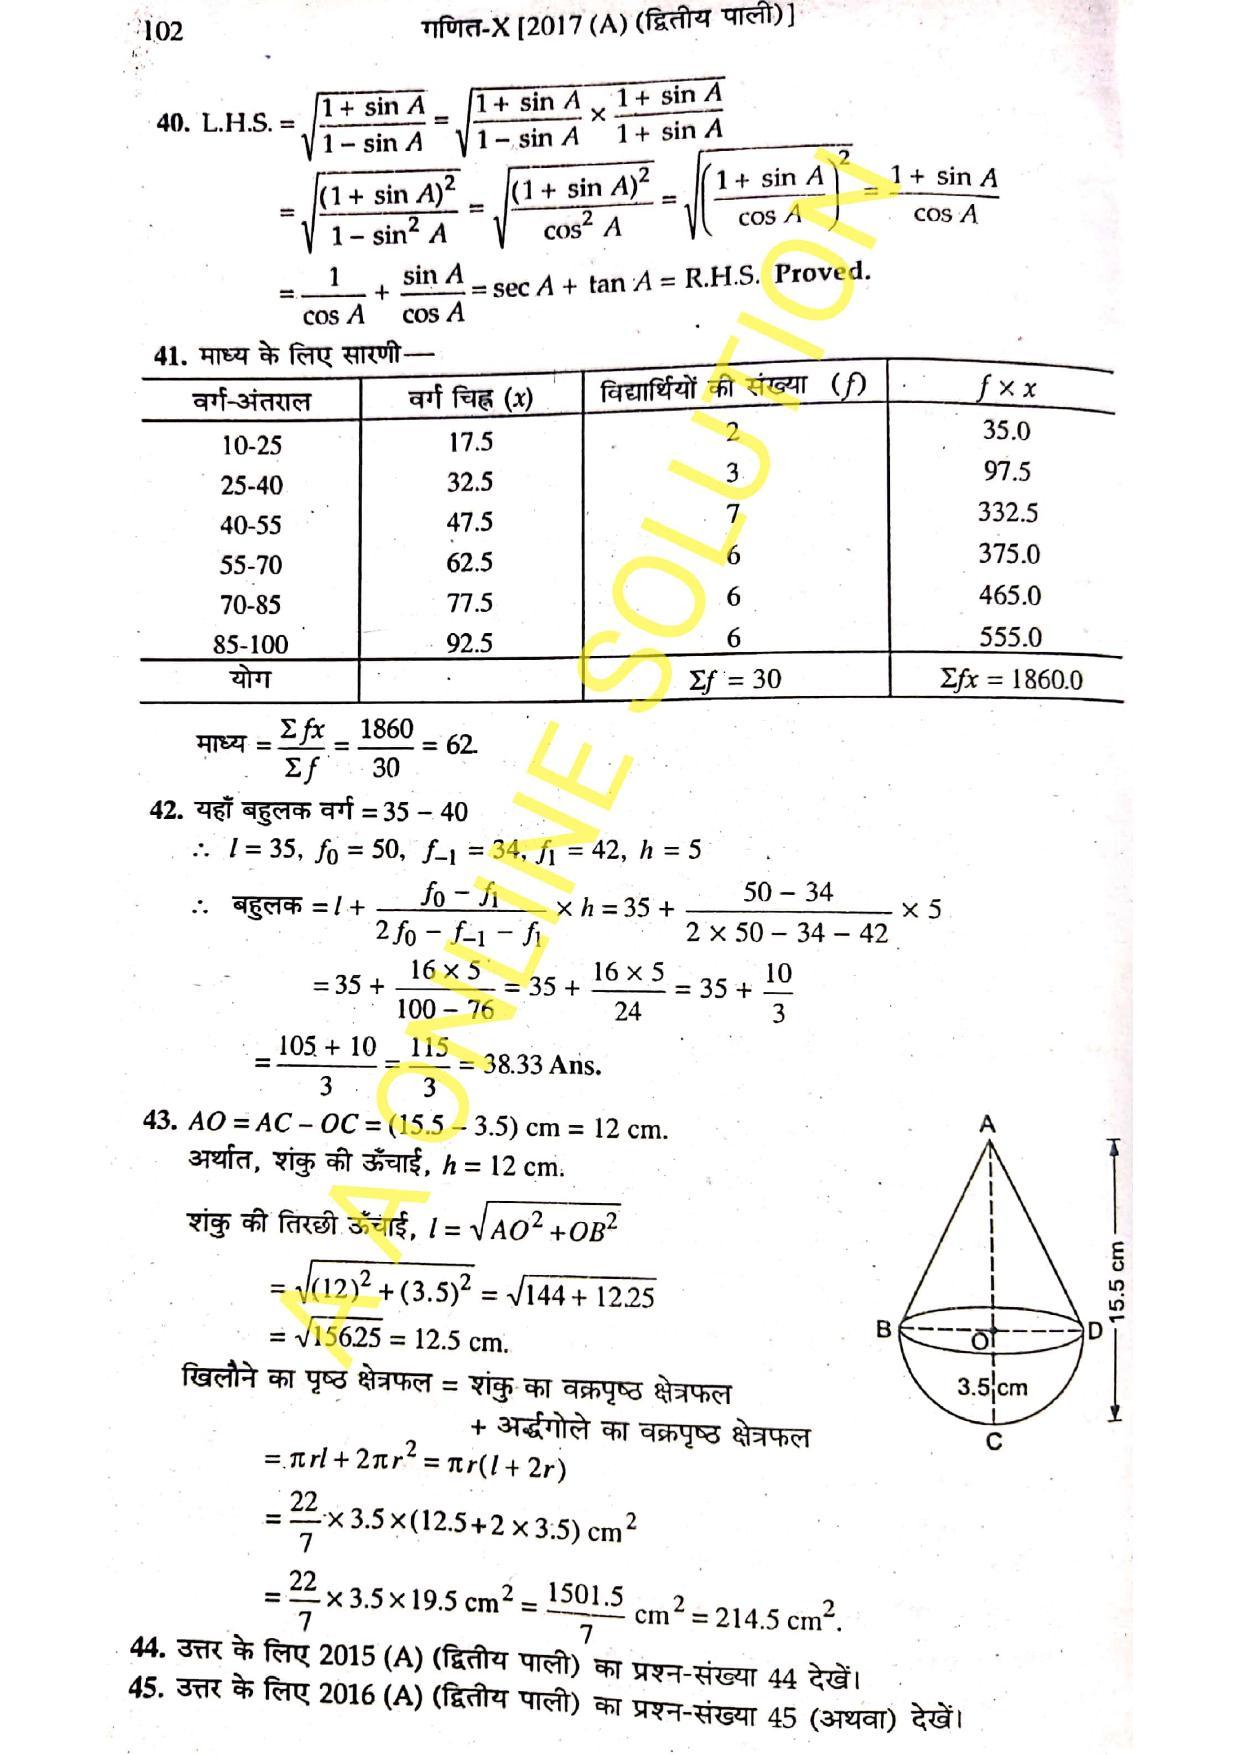 Bihar Board Class 10 Maths 2017 (2nd Sitting) Question Paper - Page 7